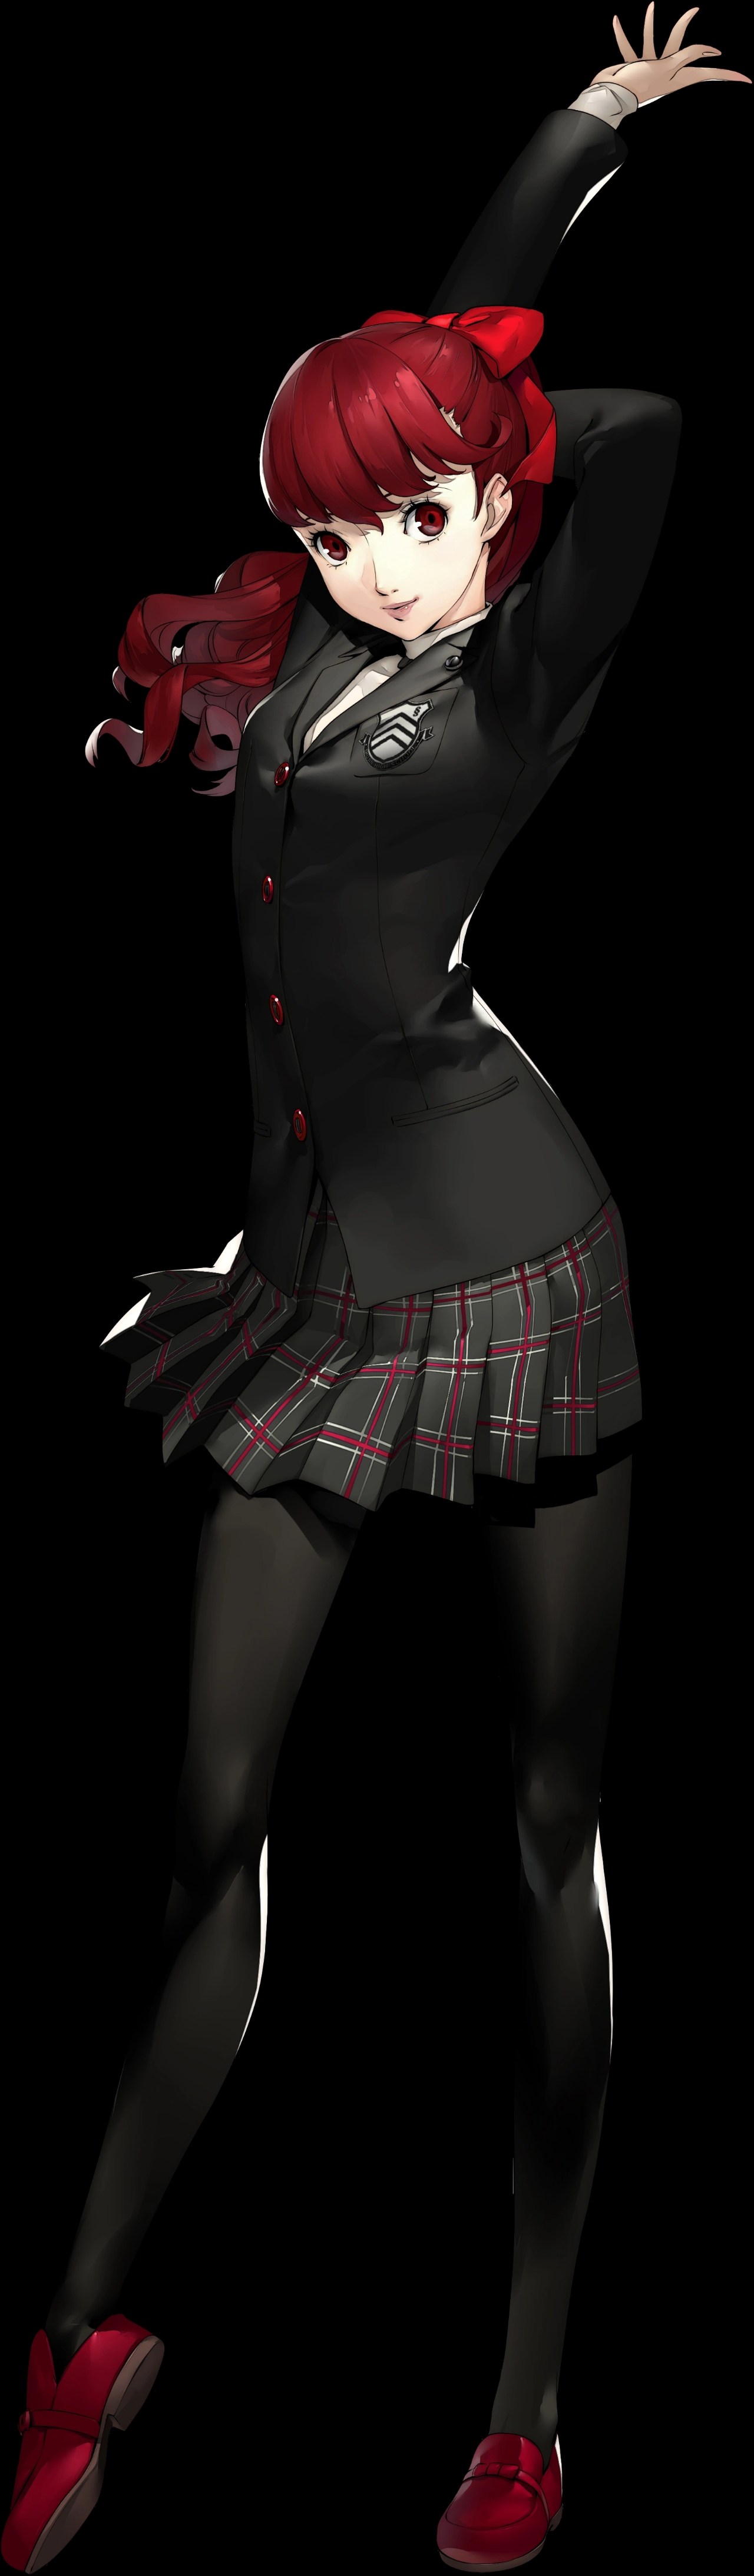 Kasumi Yoshizawa Anime Girls Video Games Portrait Display Skirt Schoolgirl School Uniform Redhead Re 1280x4374